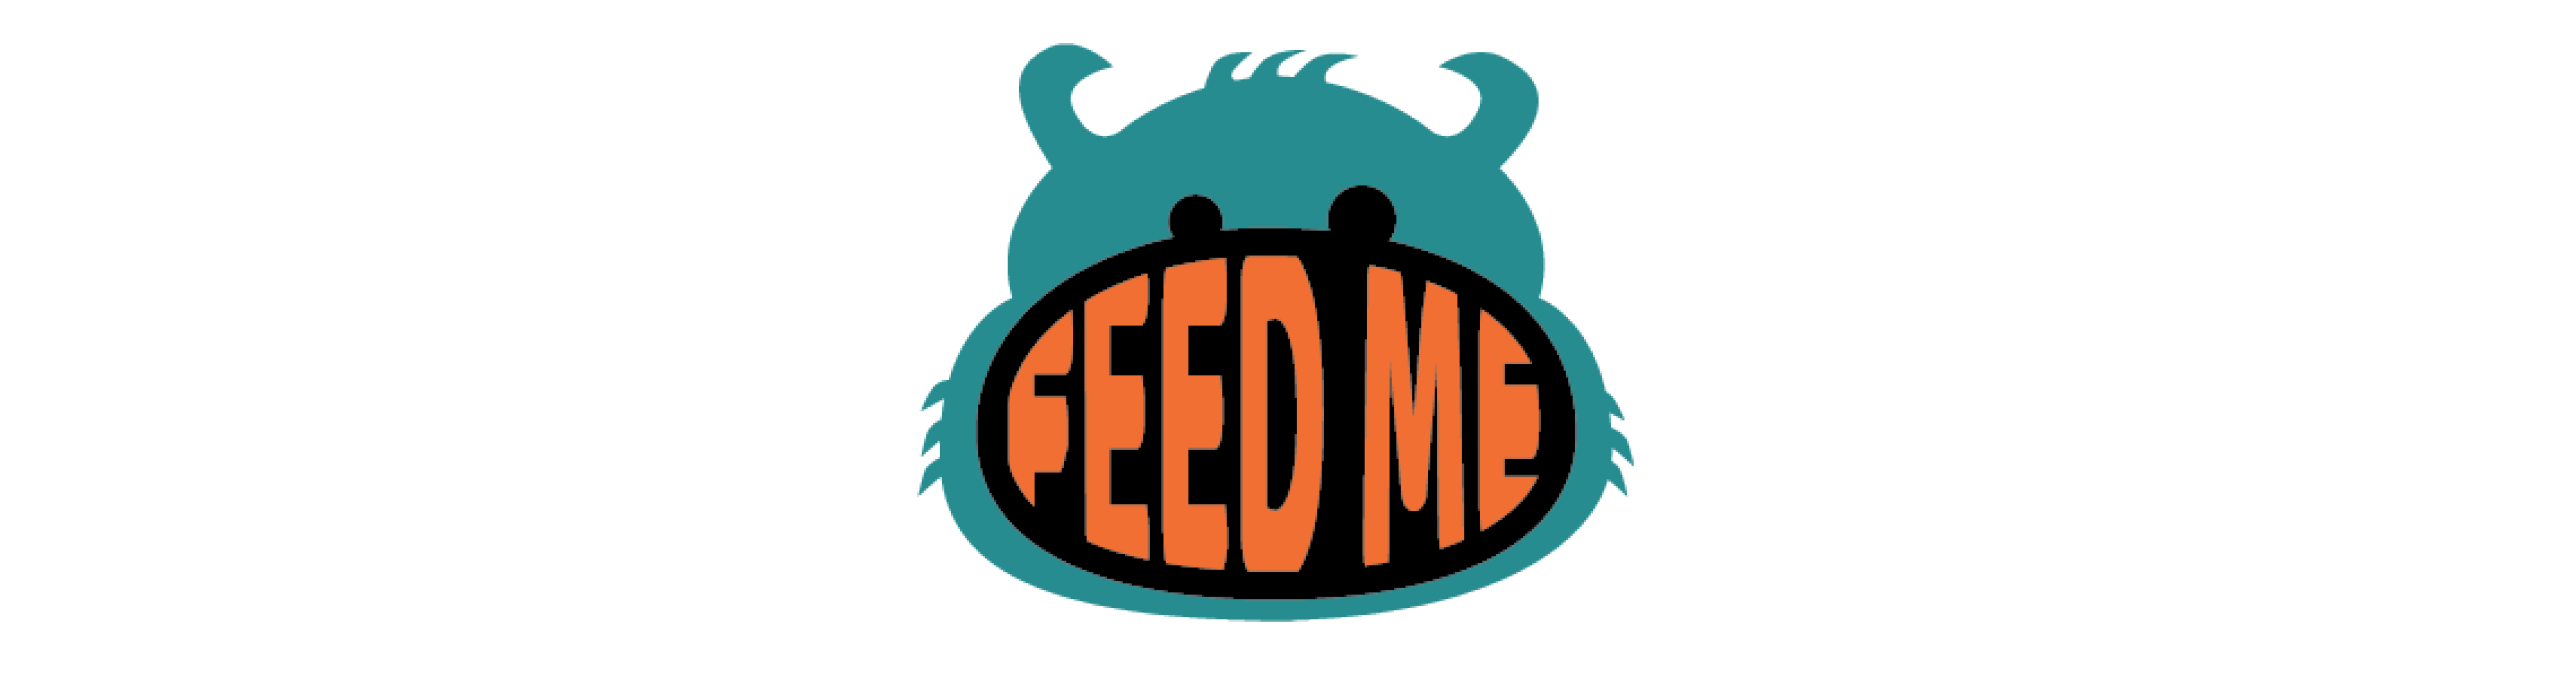 Feed Me - Logo Design